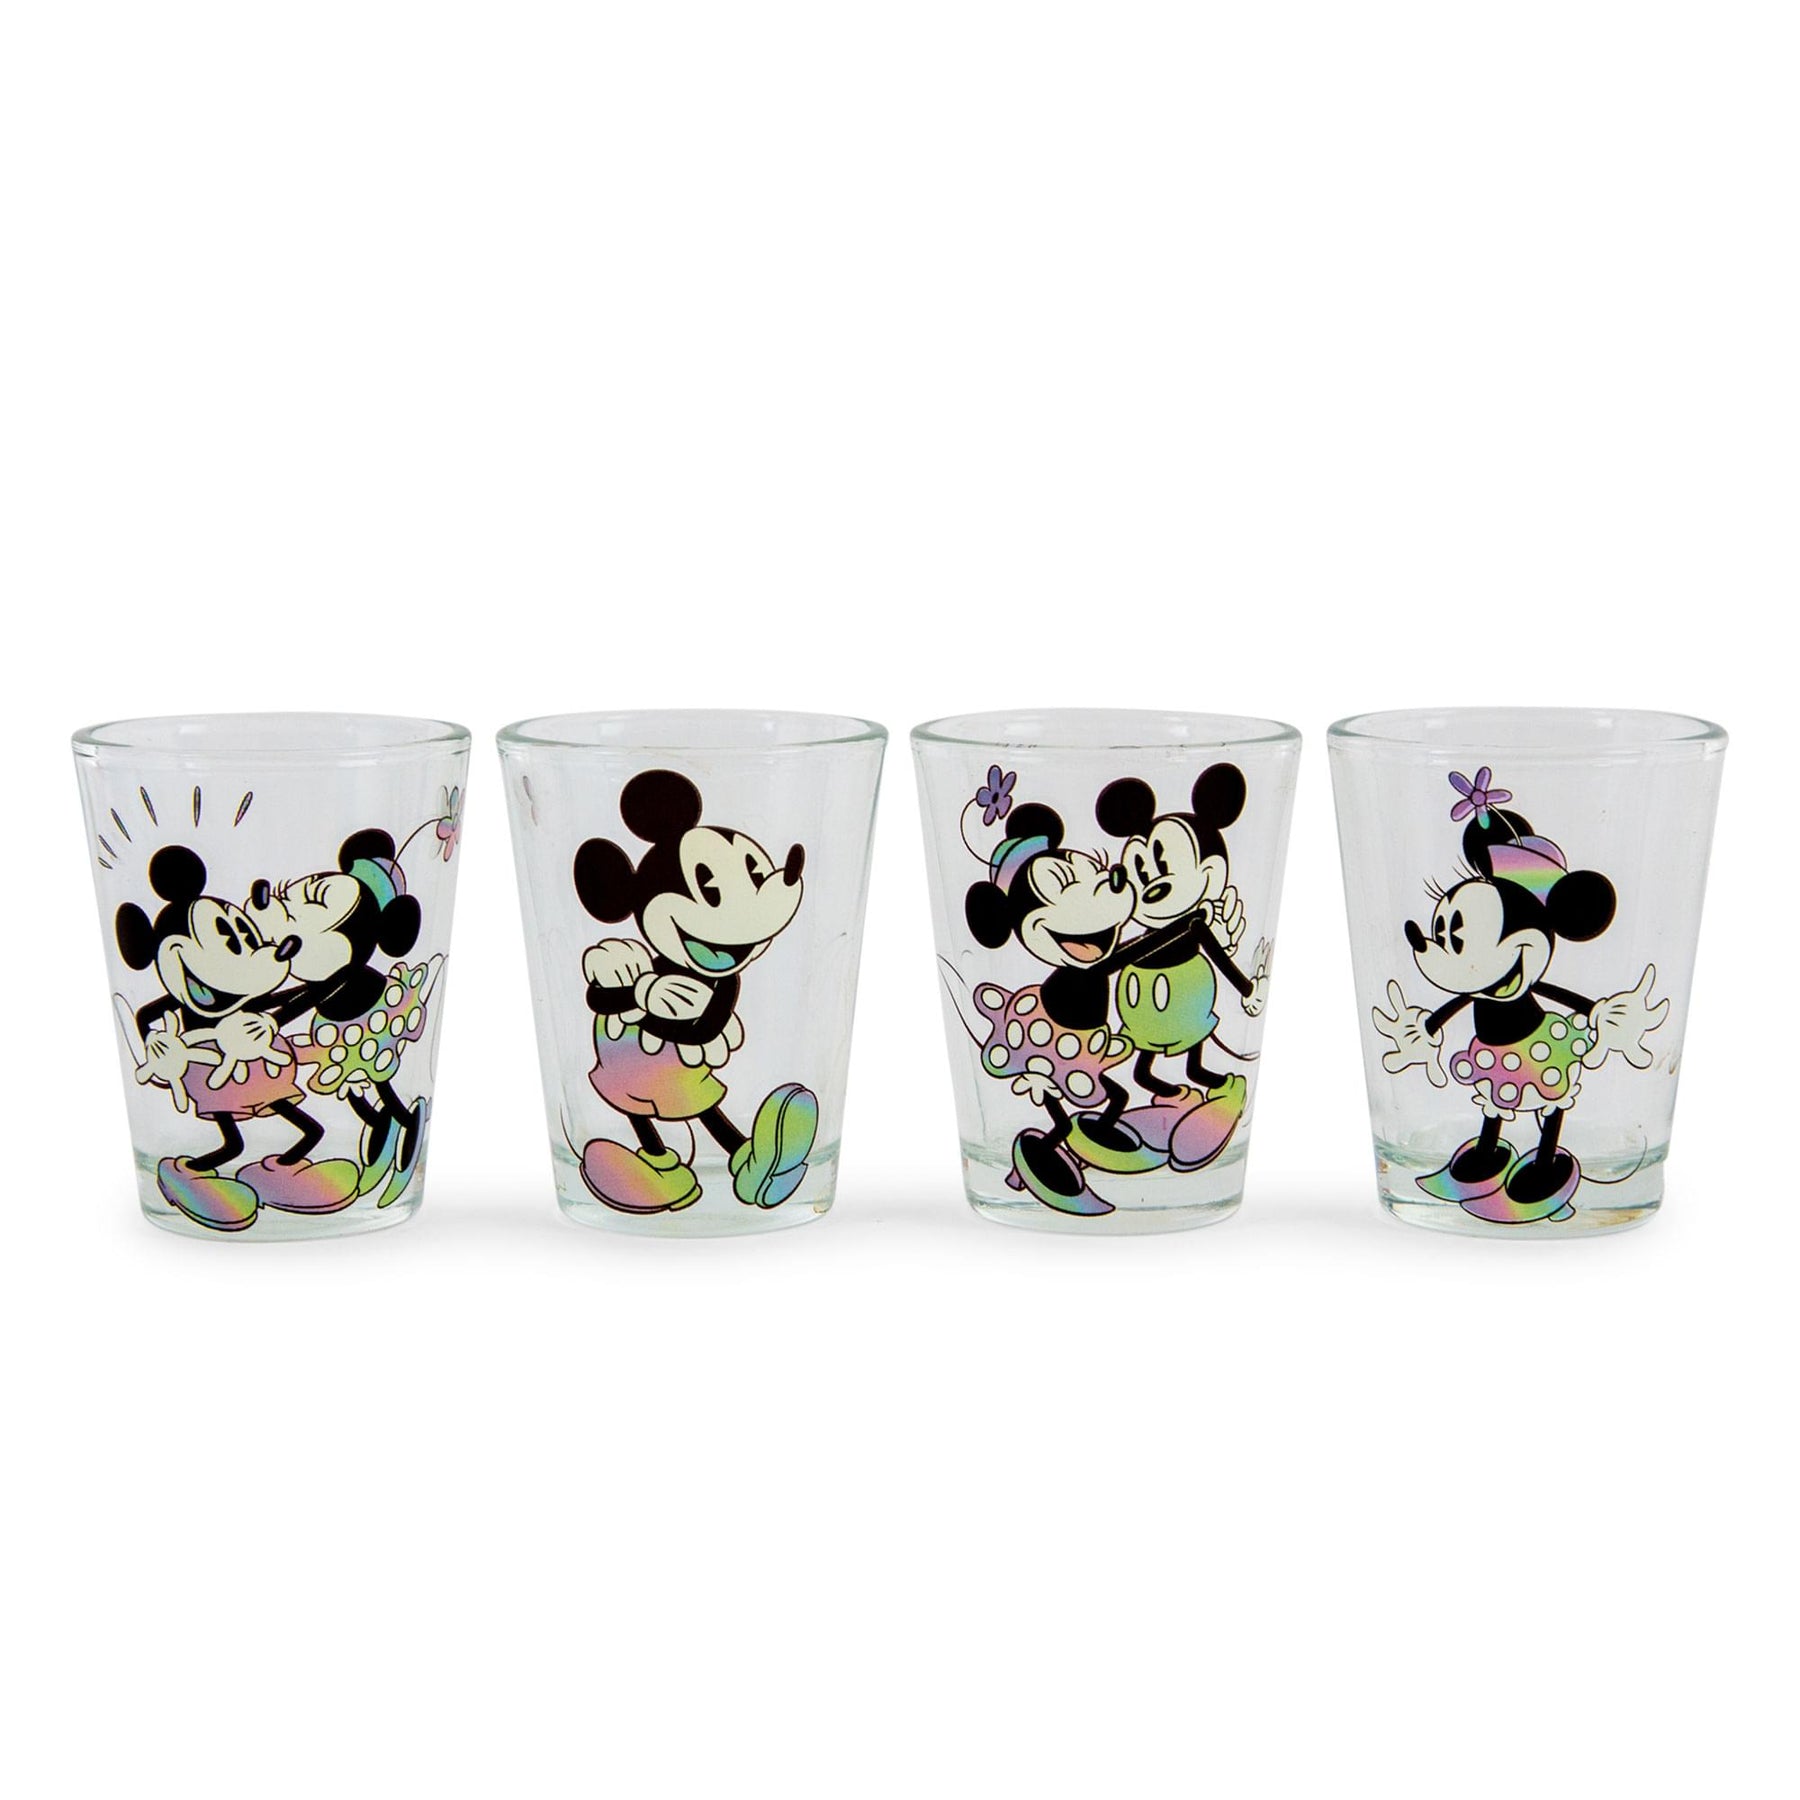 Disney Parks Mickey Mouse shot glass